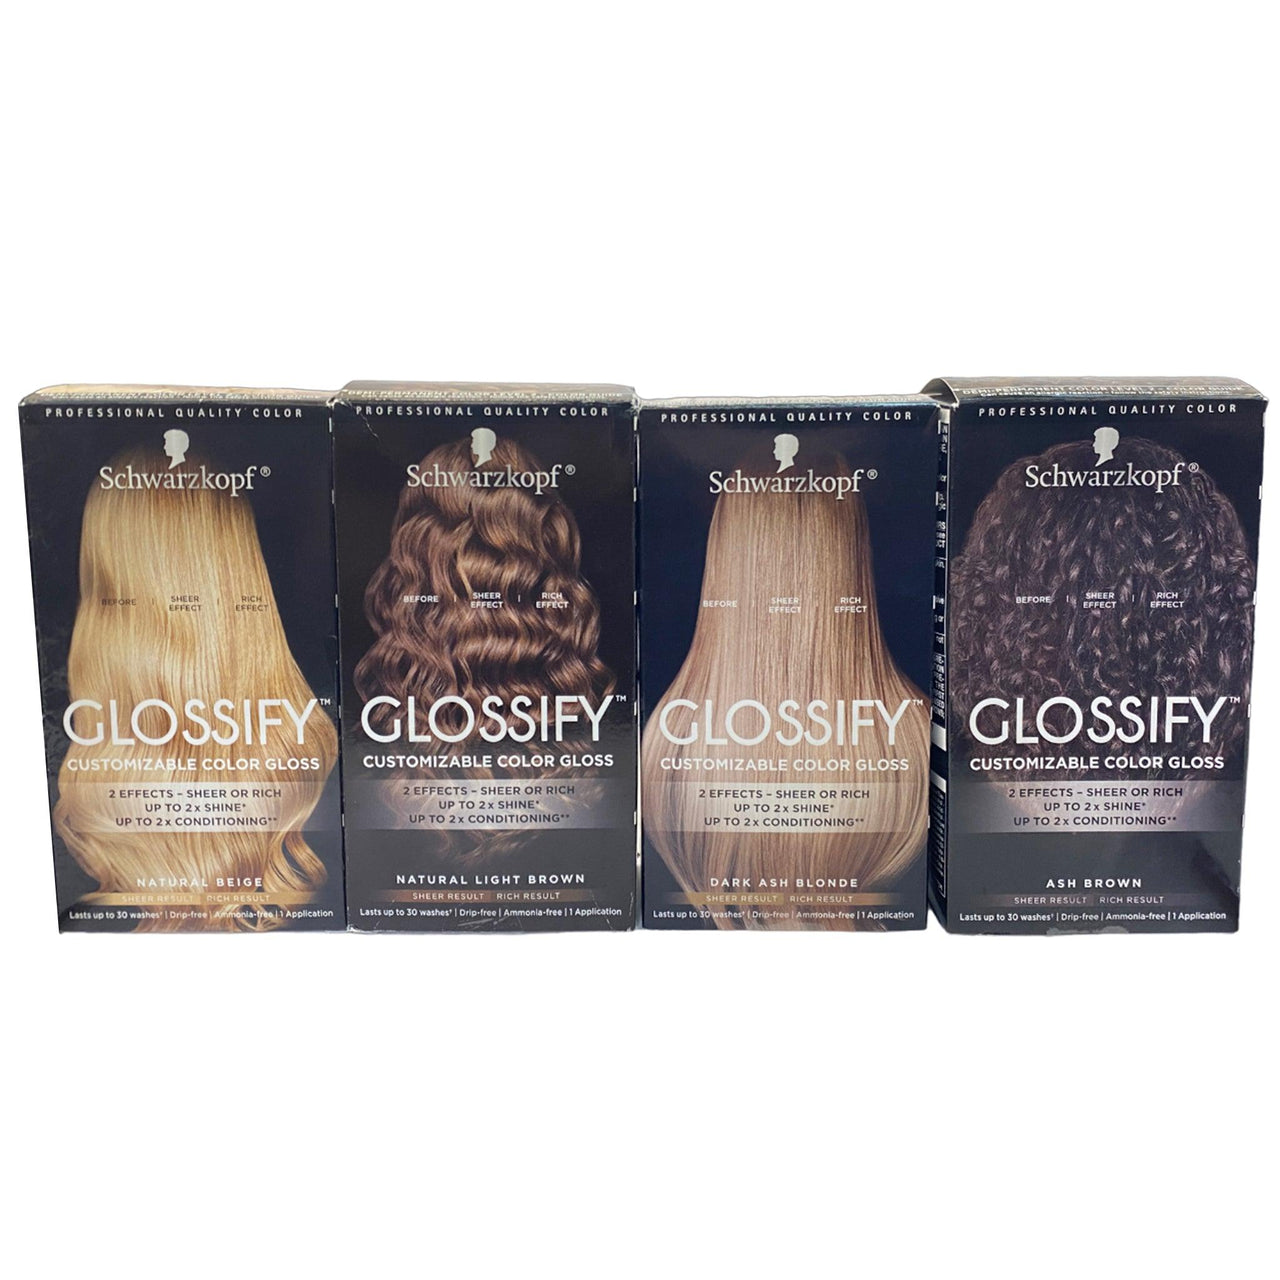 Schwarzkopf Customizable Color Gloss Assorted Hair Dye's (50 Pcs Box) - Discount Wholesalers Inc